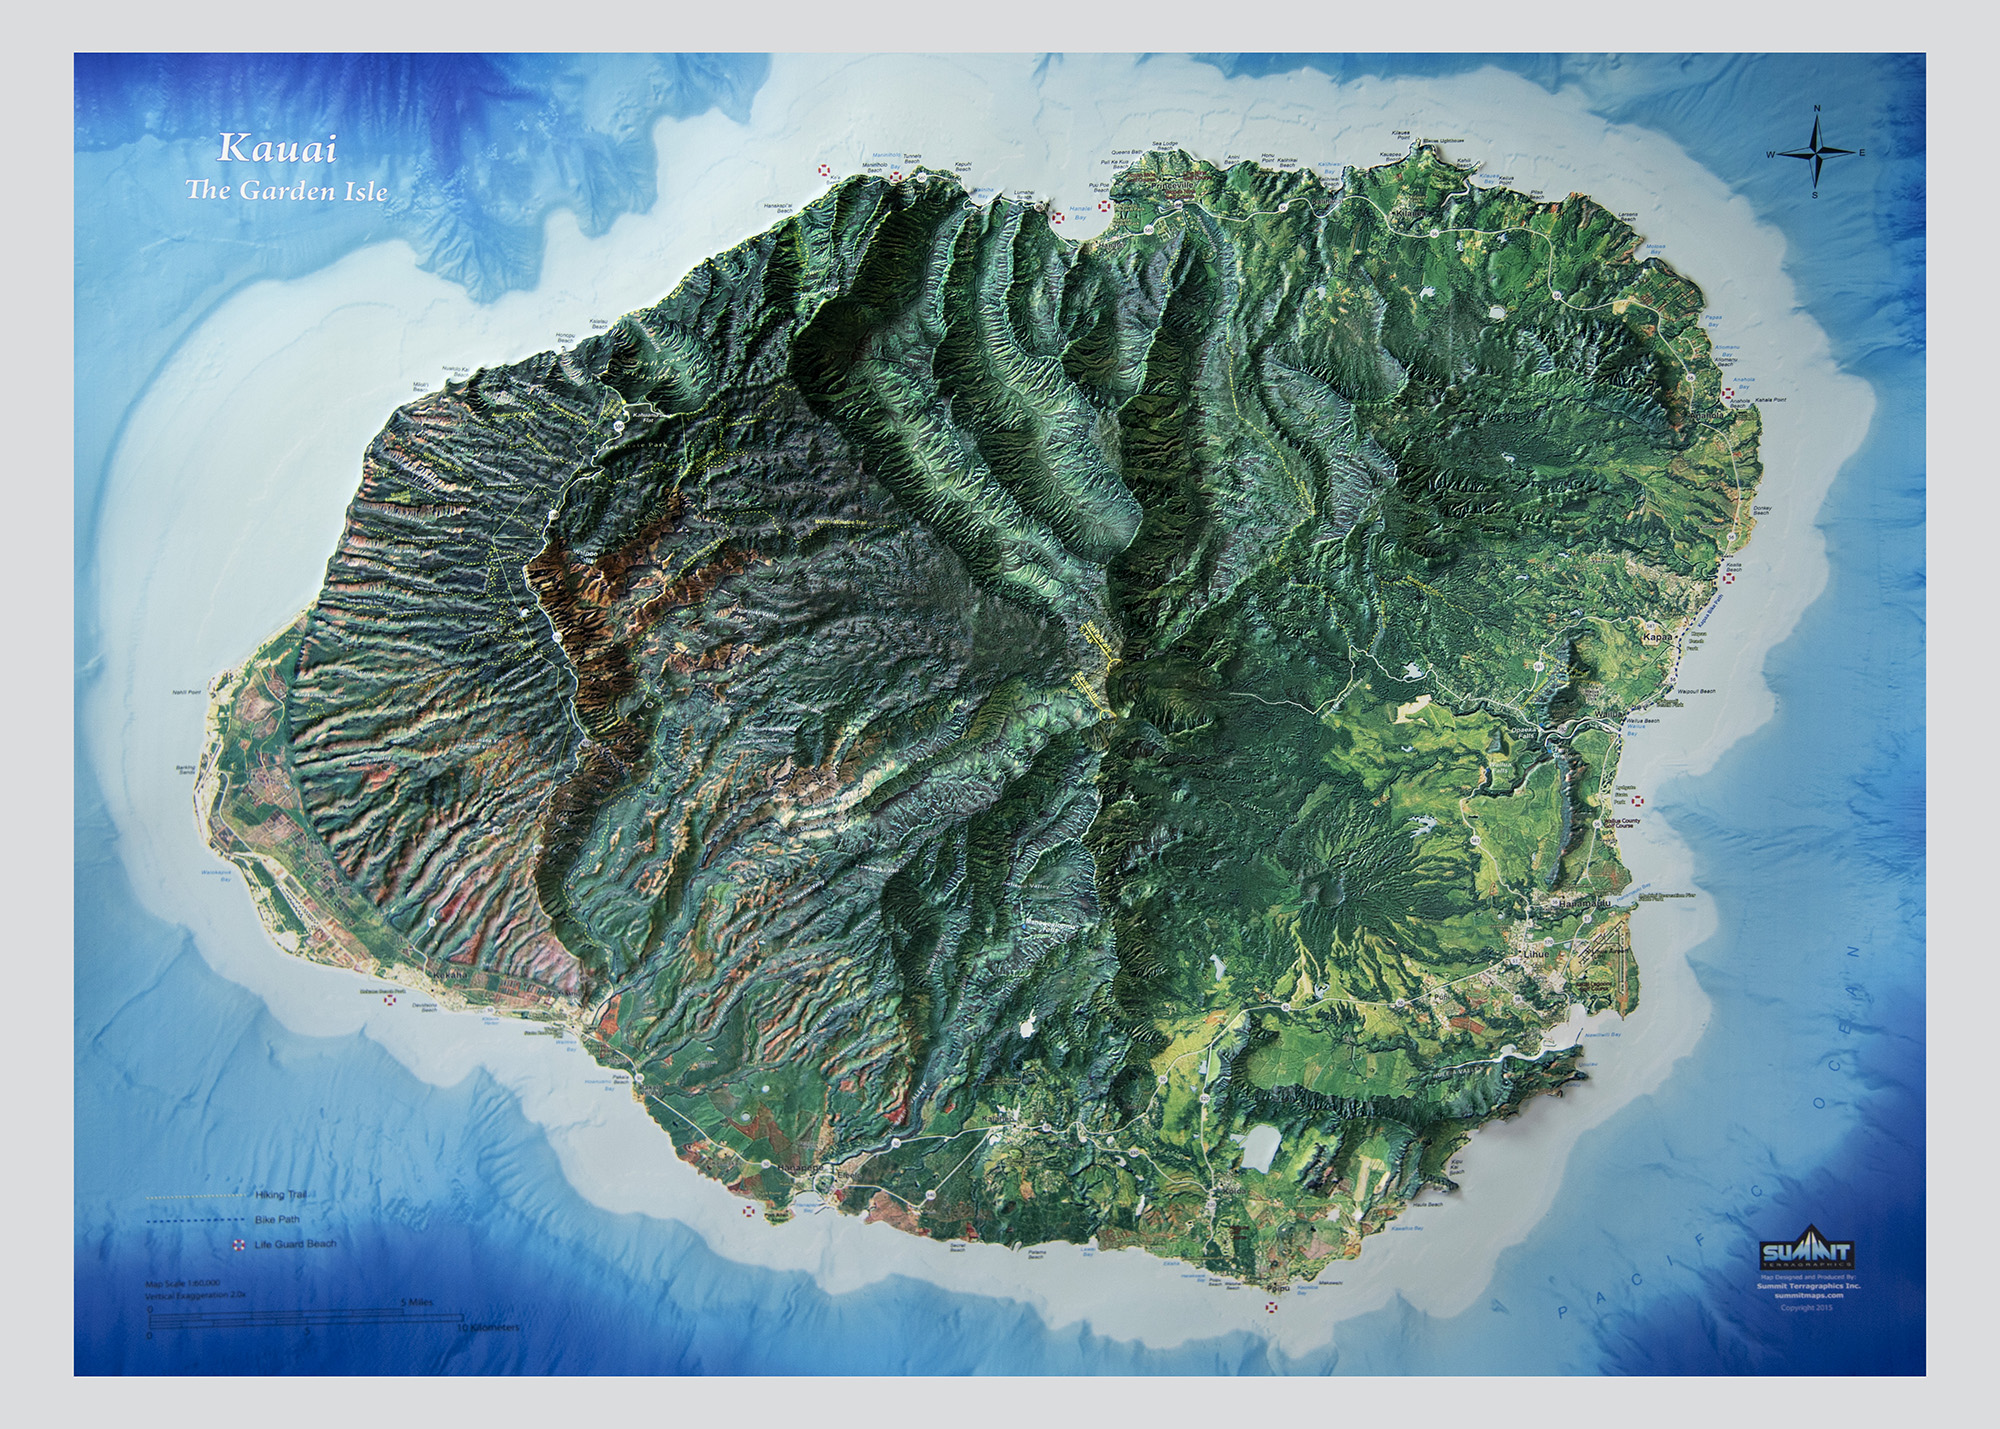 Kauai Hawaii Earth Map DSC 2439 2 